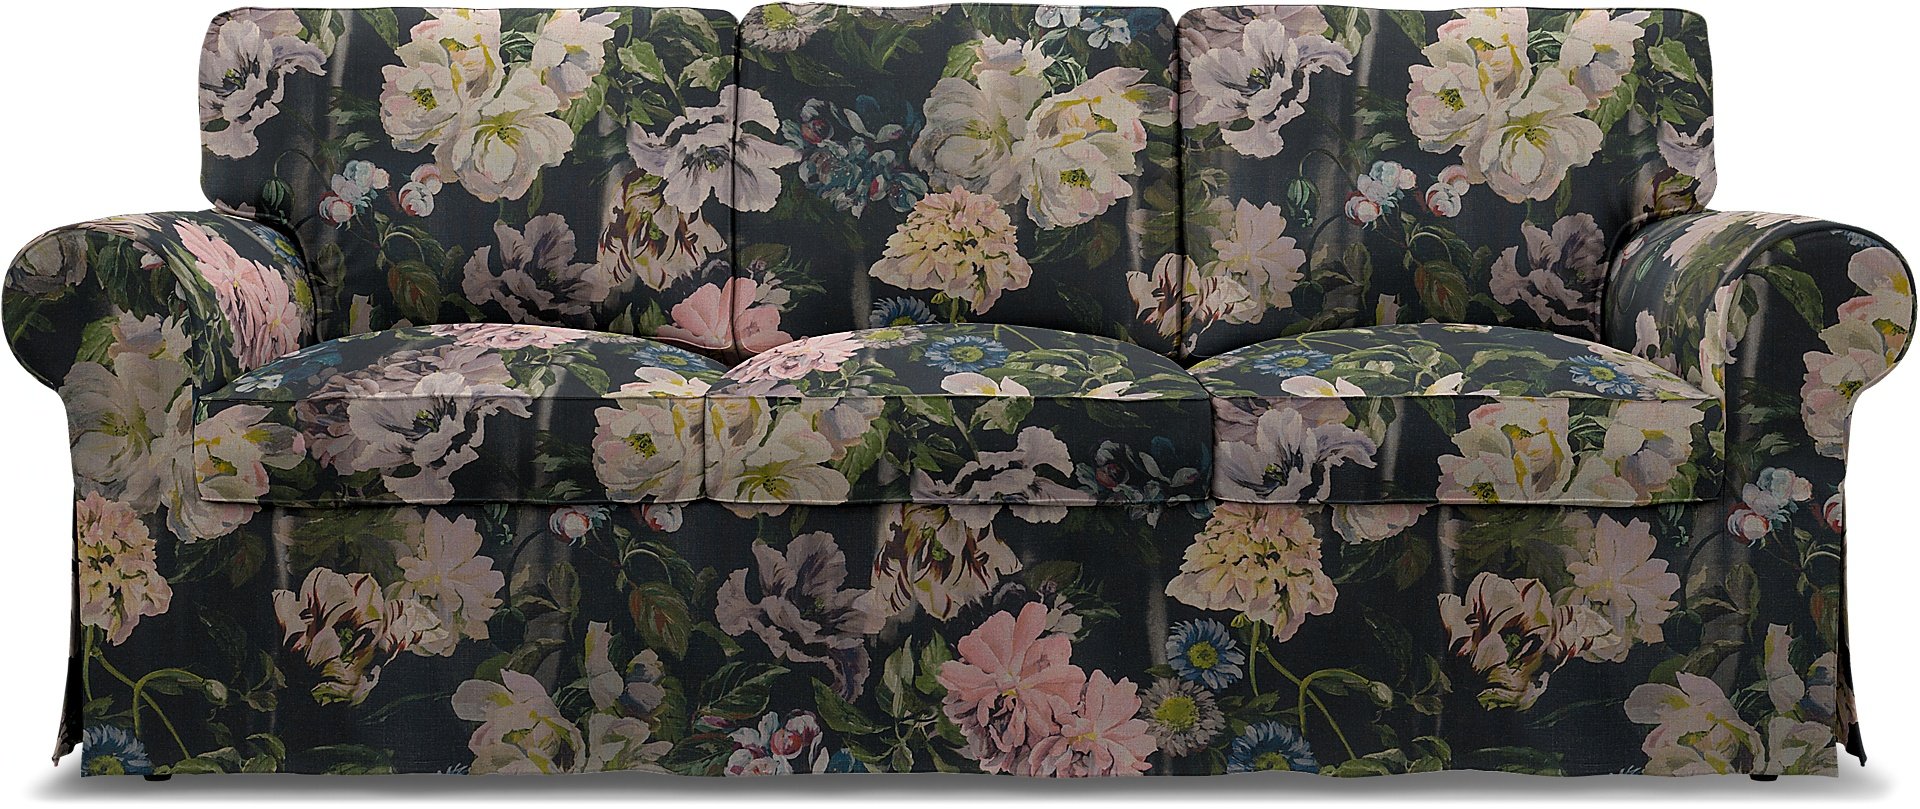 IKEA - Ektorp 3 Seater Sofa Bed Cover, Delft Flower - Graphite, Linen - Bemz